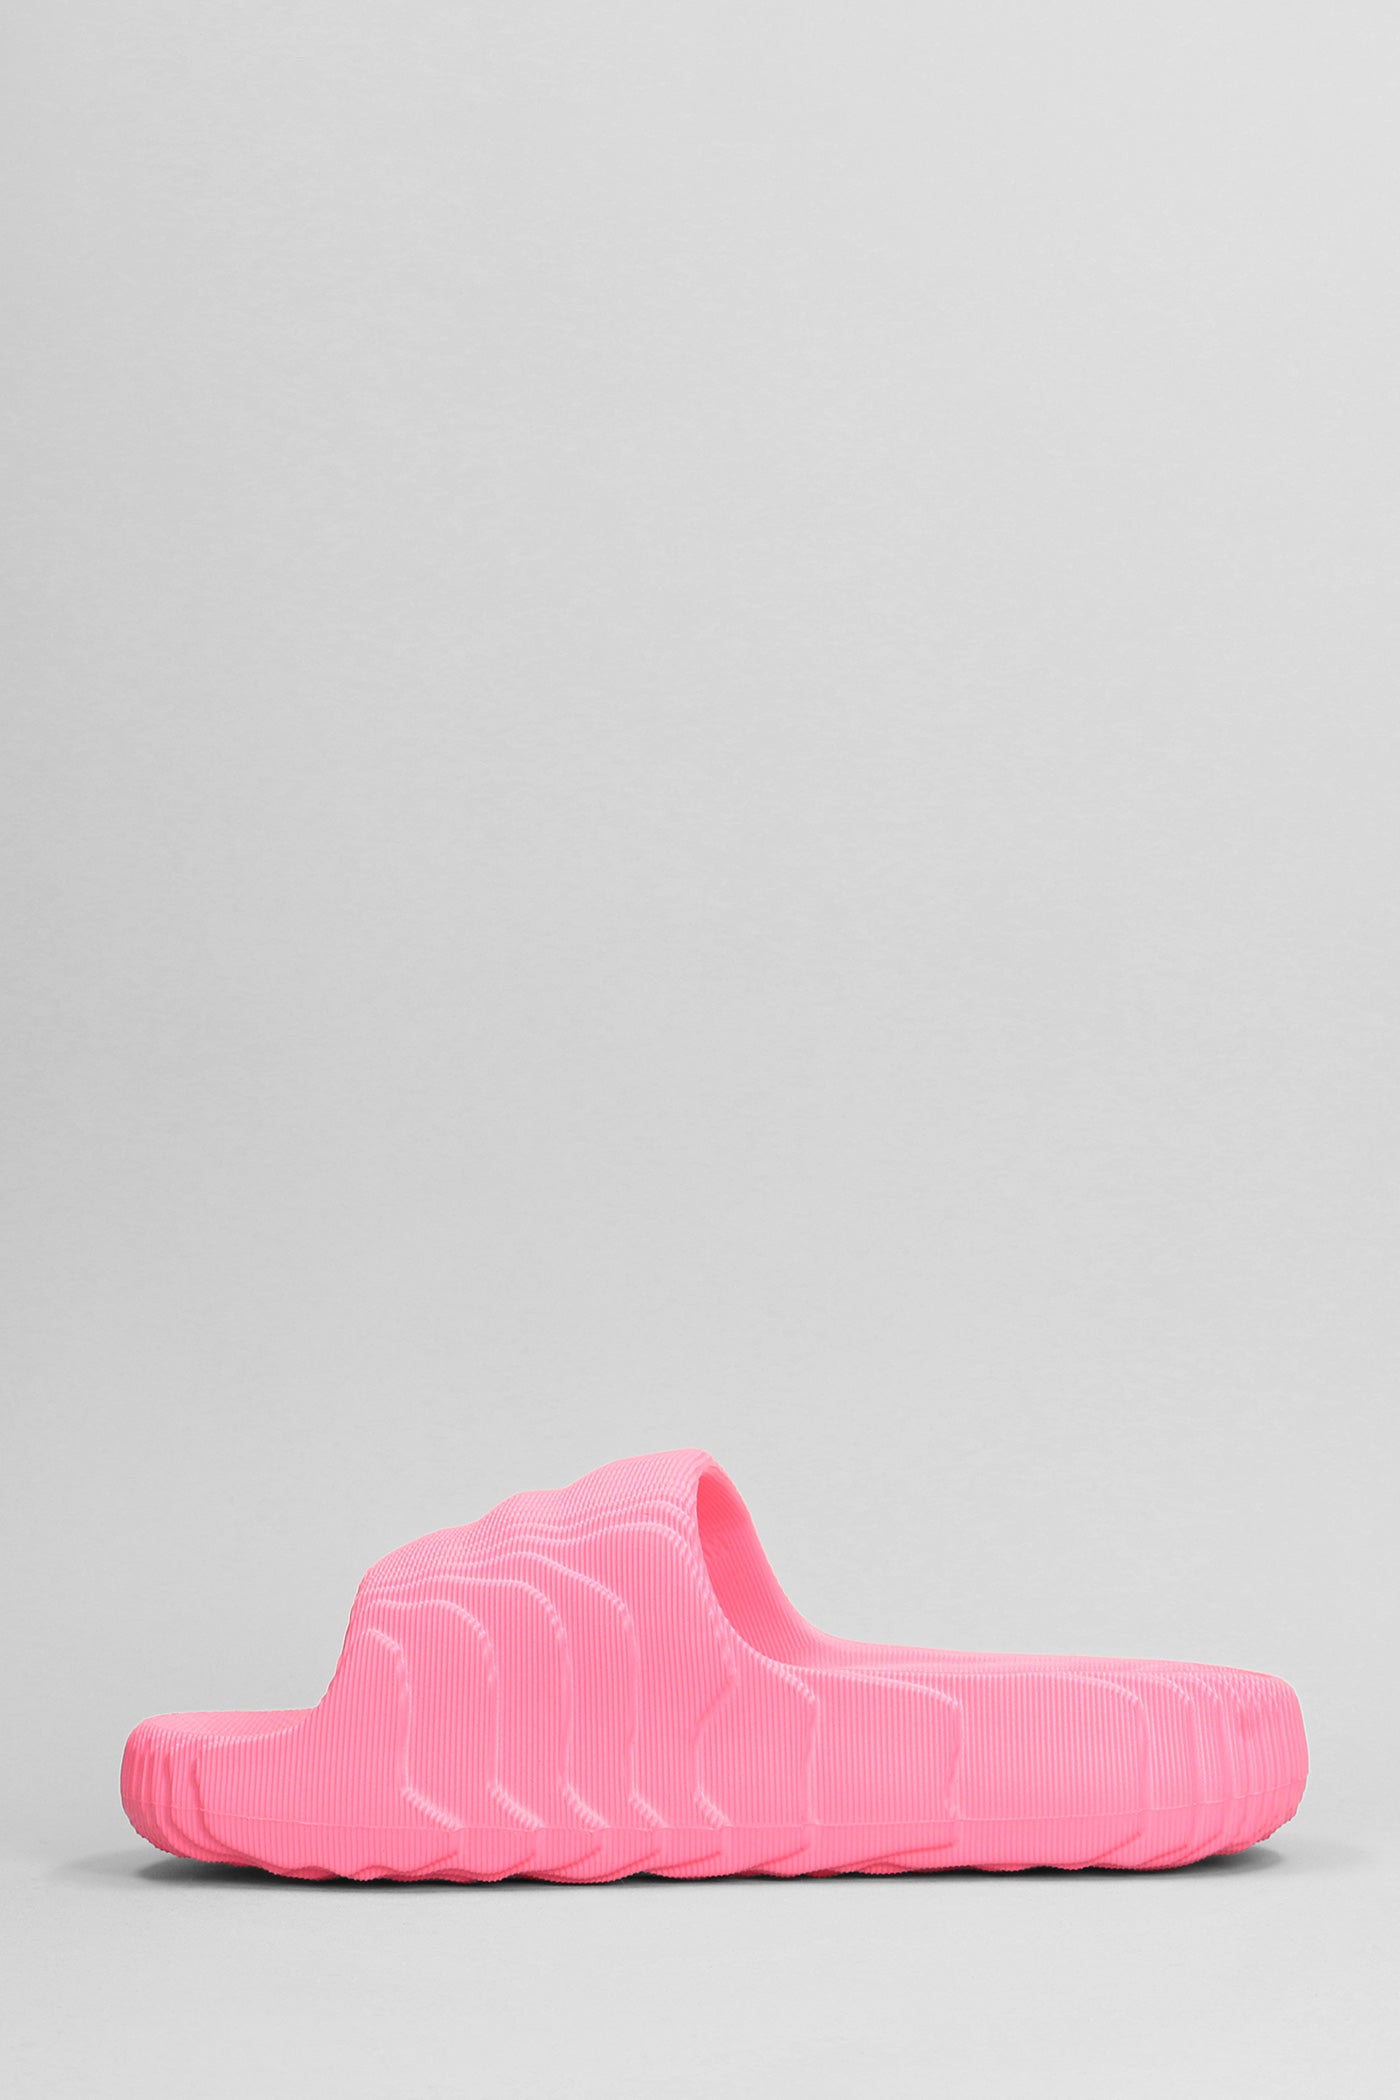 Adilette 22 Flats in rose-pink rubber/plasic